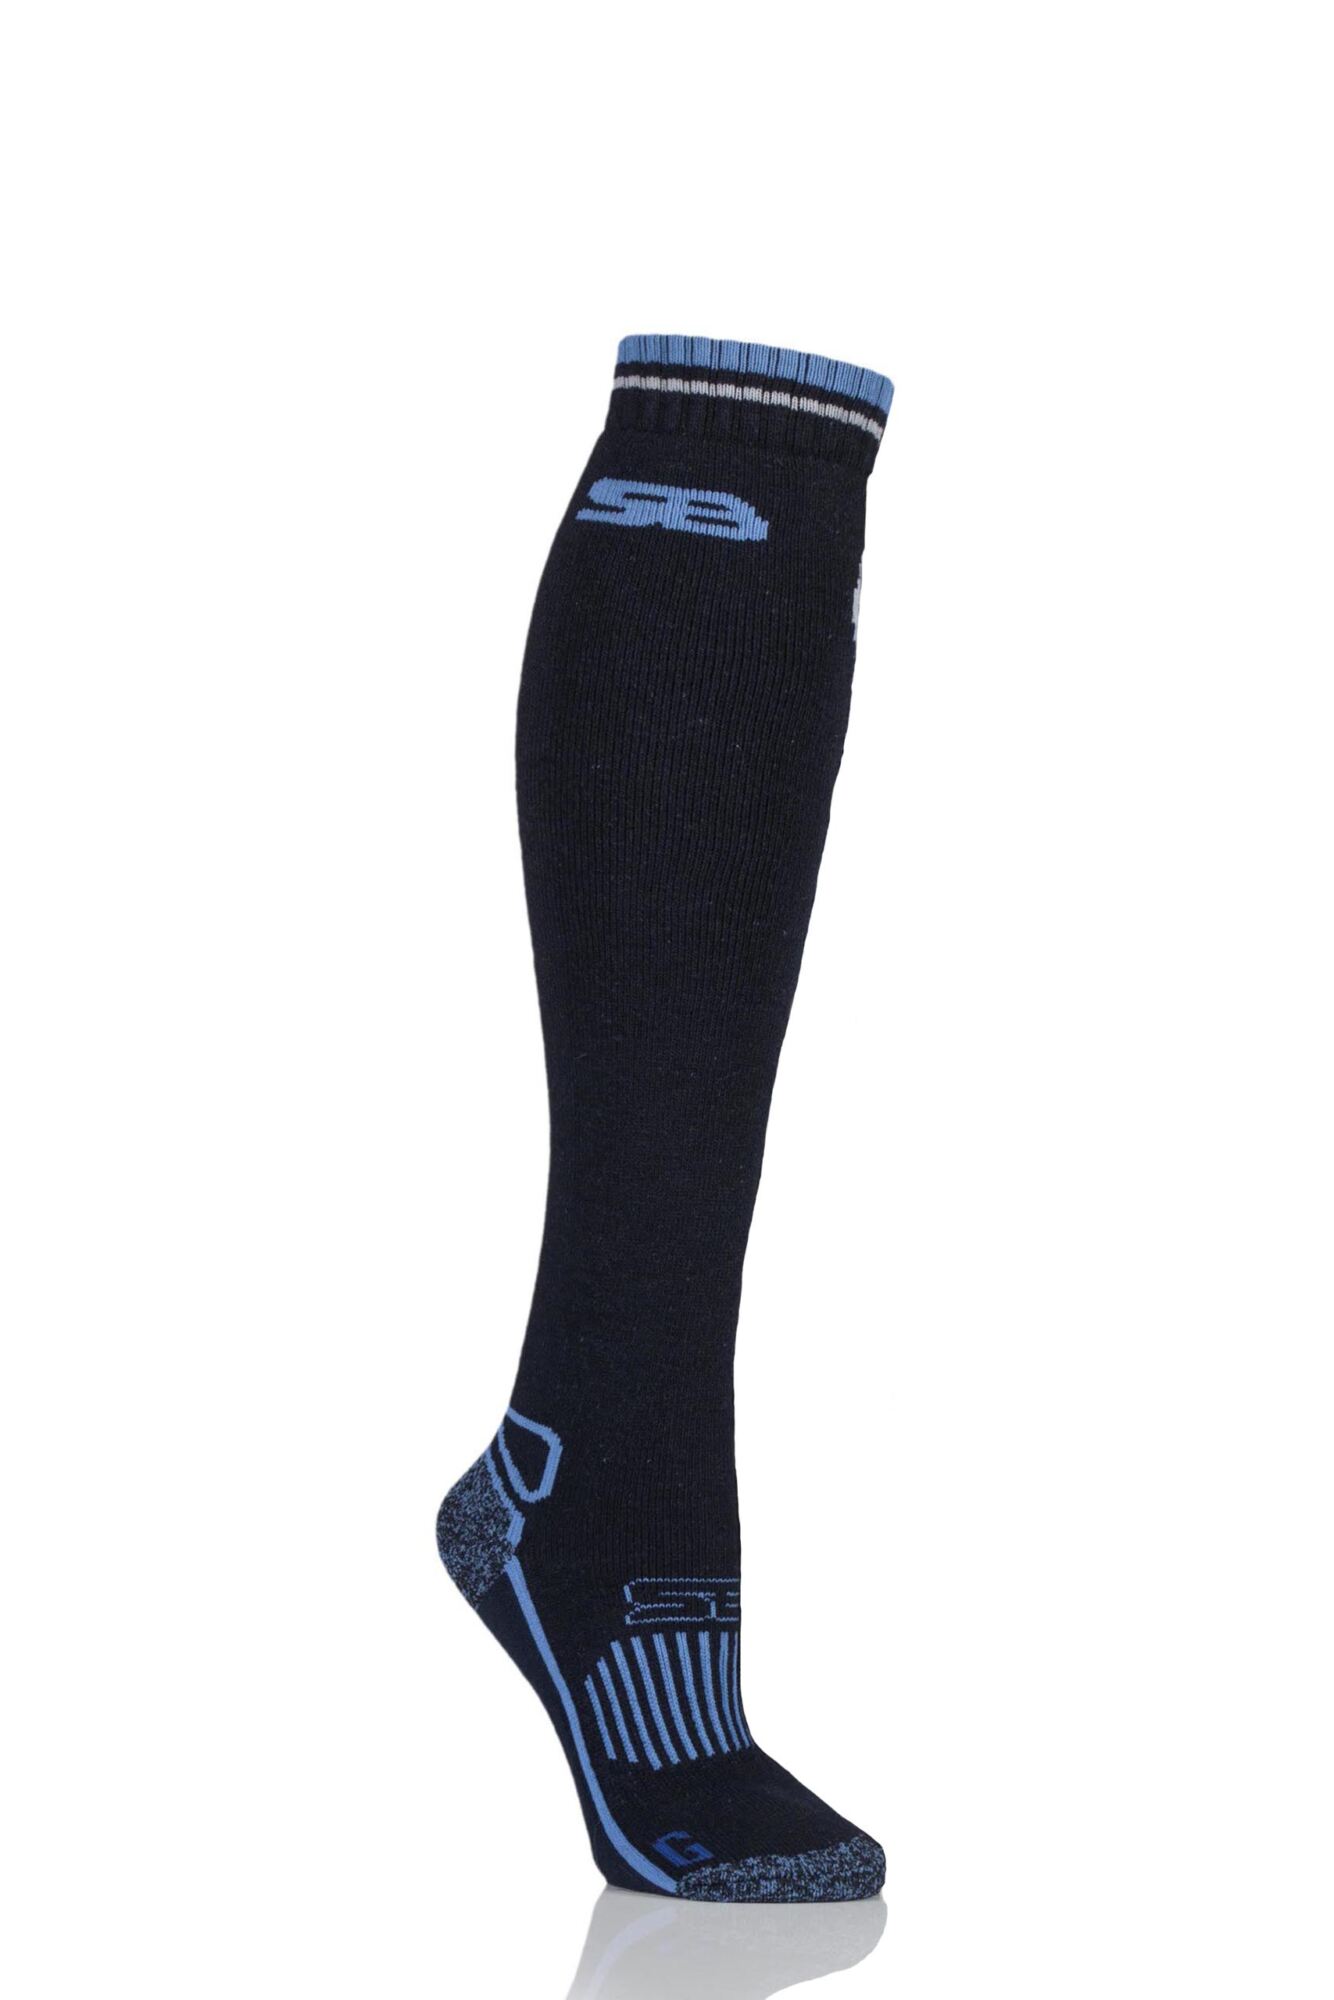 Storm Bloc with BlueGuard Equestrian Long Wool Blend Socks